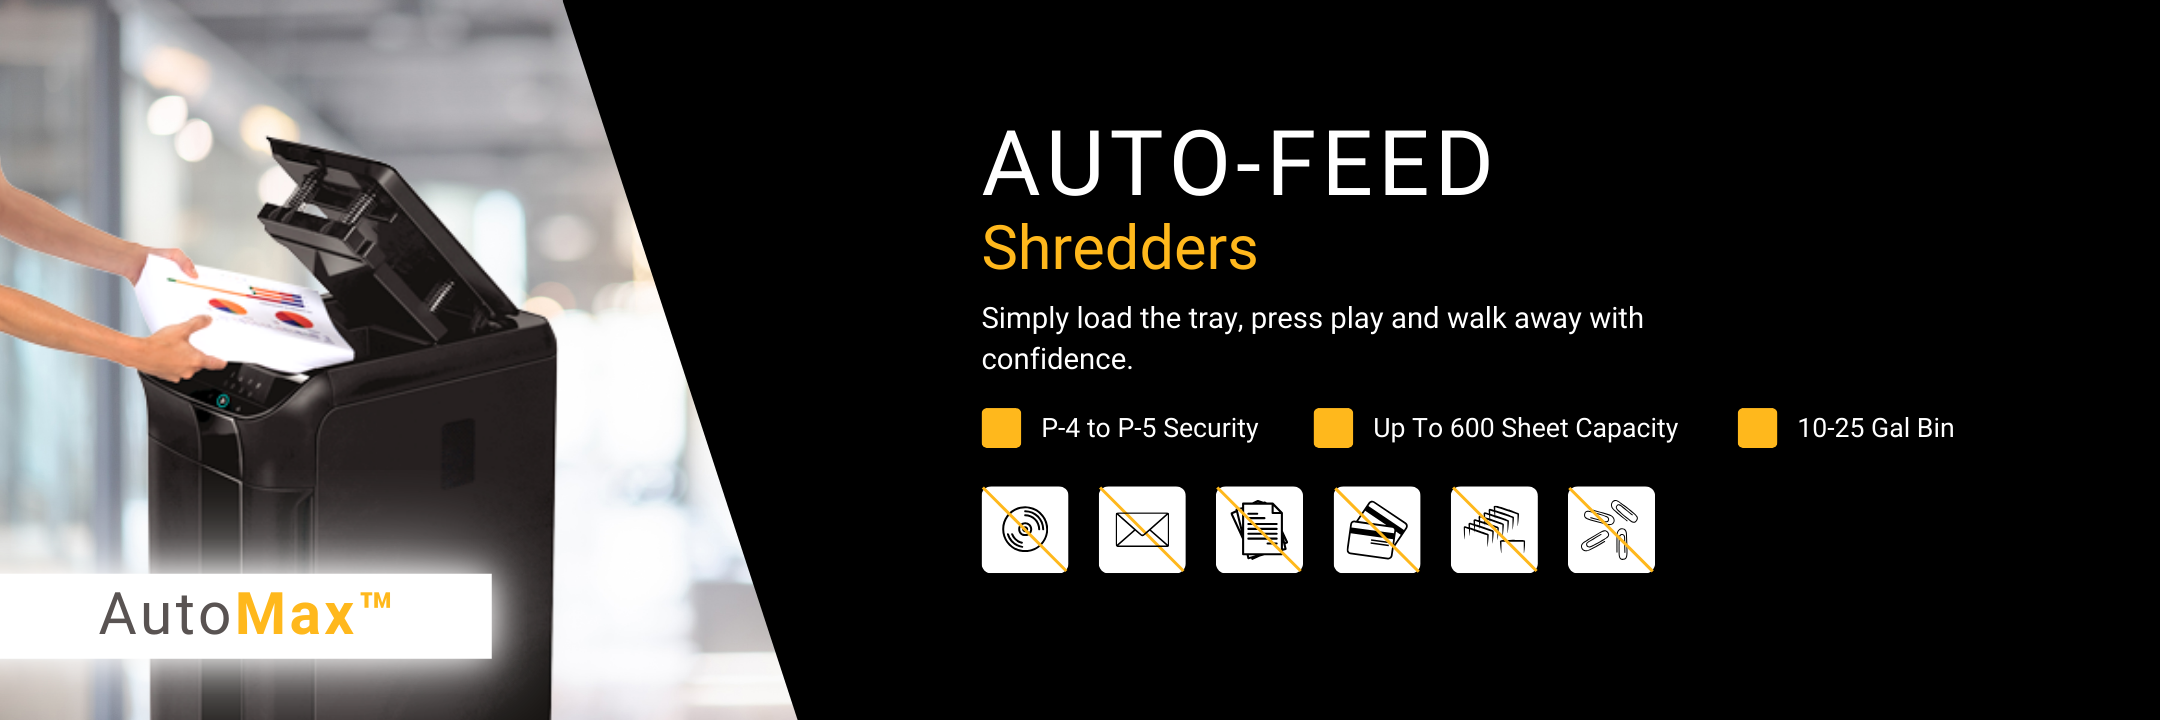 Fellowes-Auto-Feed-Shredders-USA